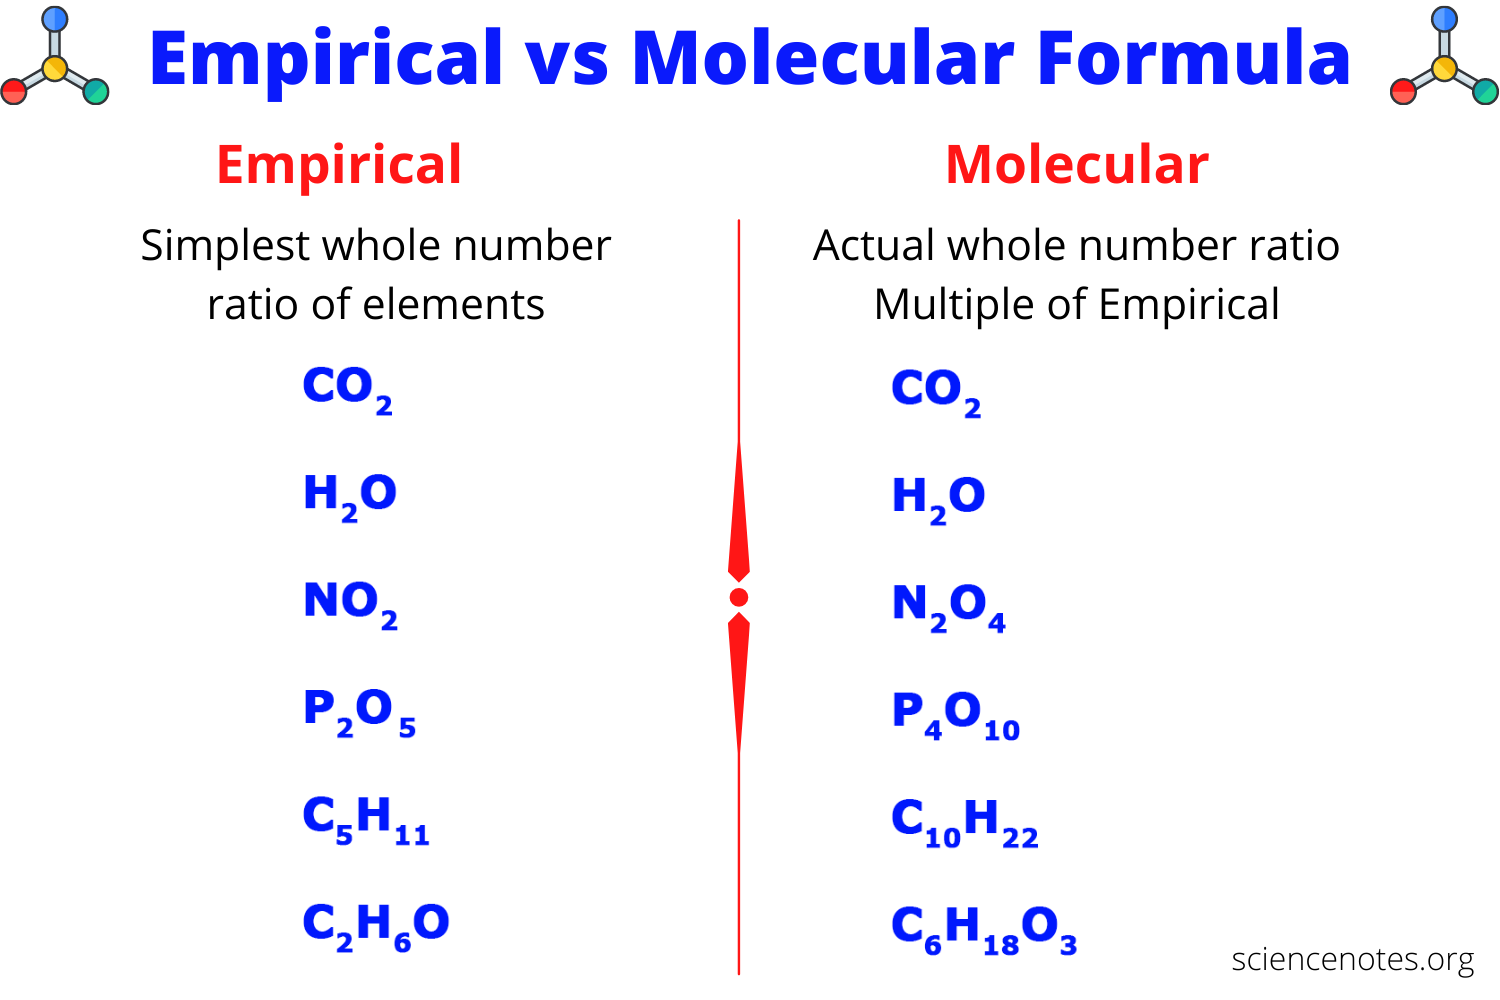 Empirical Formula vs Molecular Formula